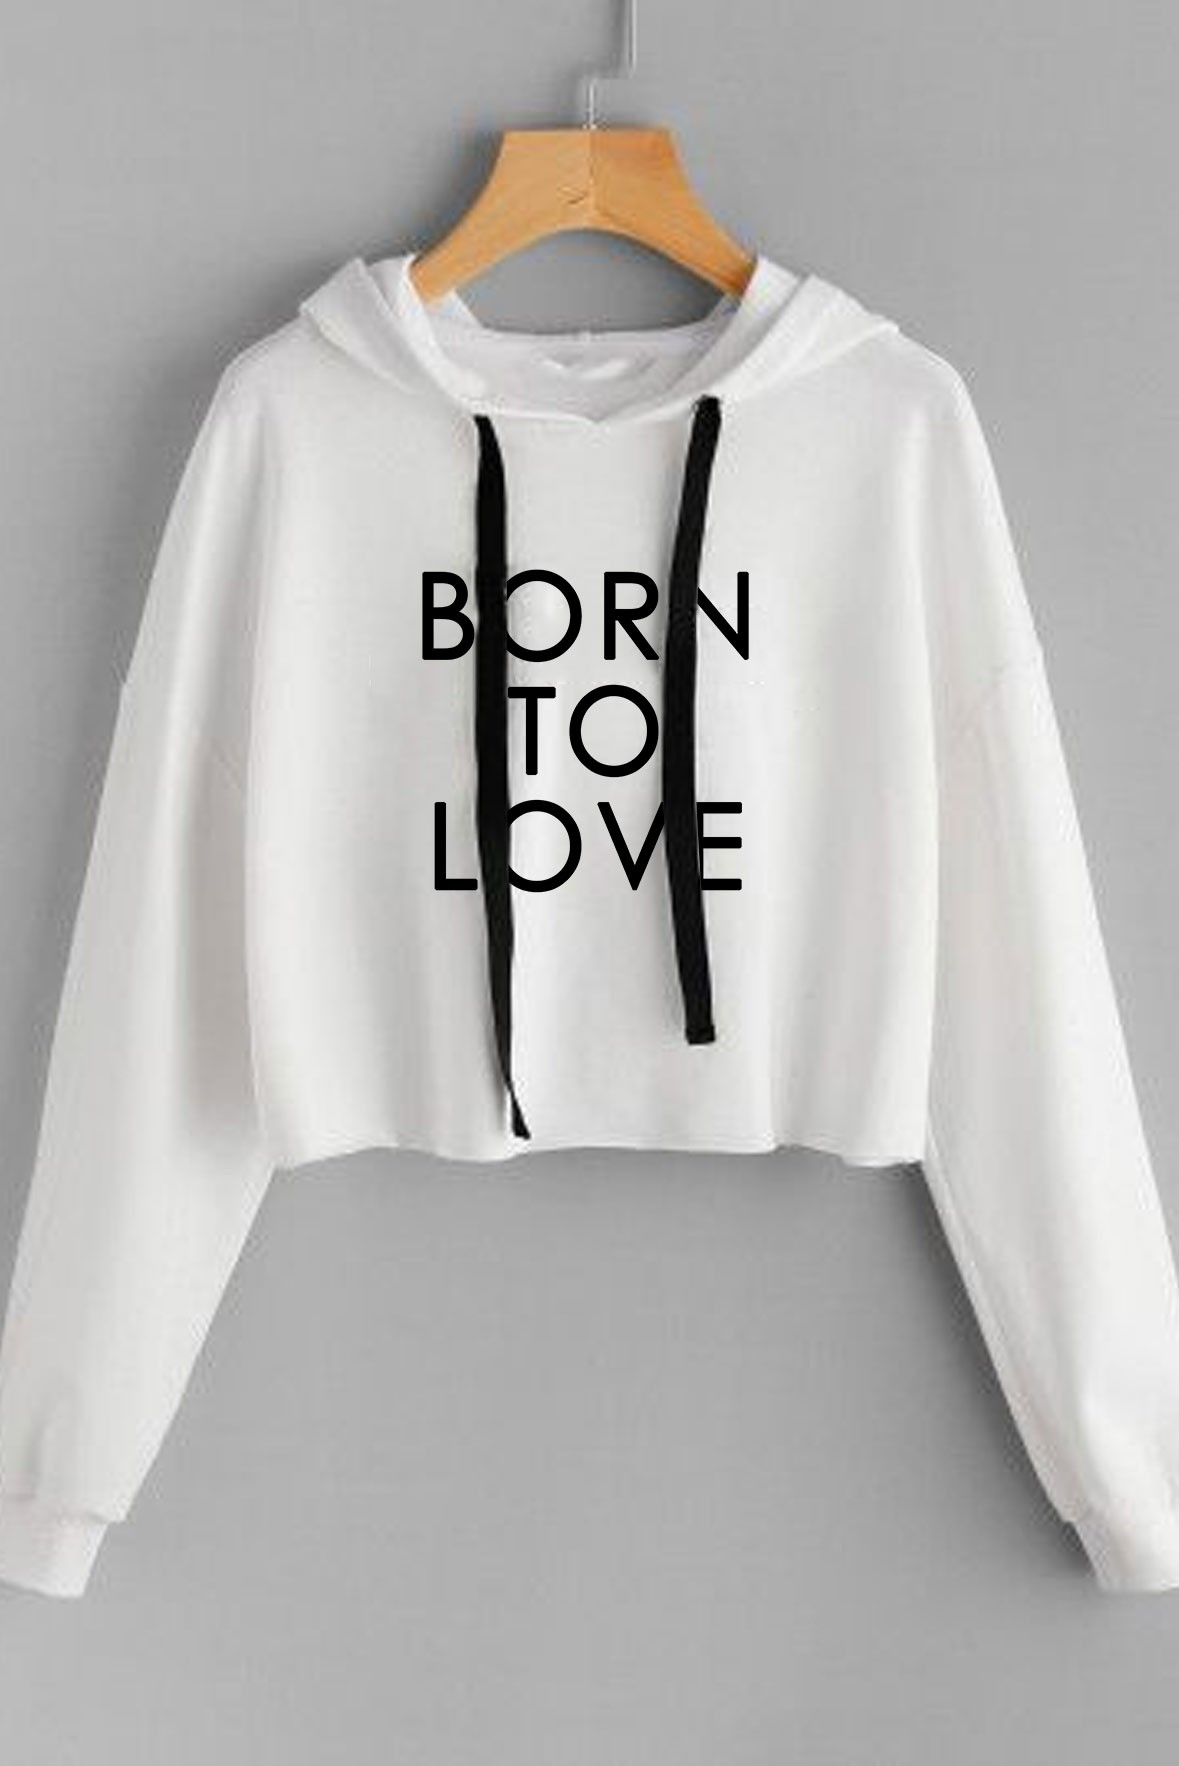 Born to love hoodie